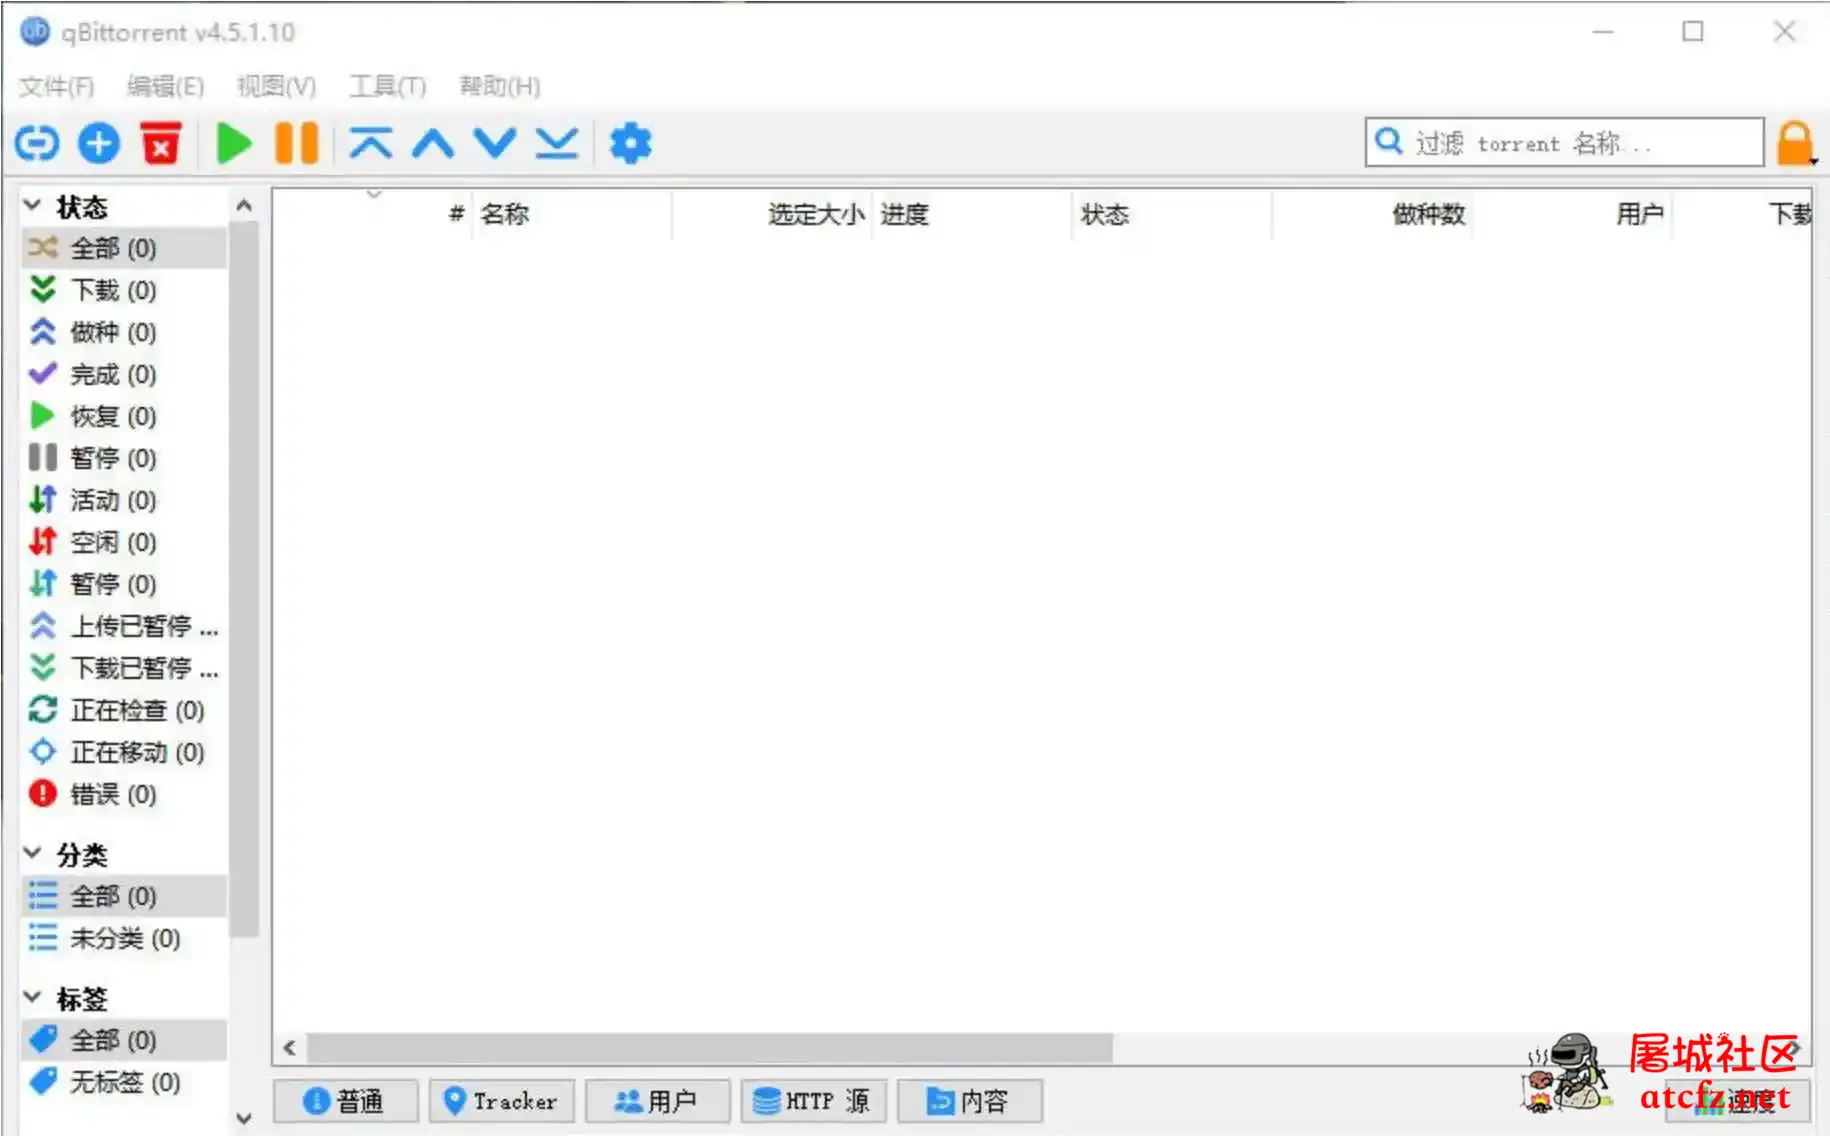 qBittorrent v4.5.3.10增强便携版BT种子下载工具 屠城辅助网www.tcfz1.com9759